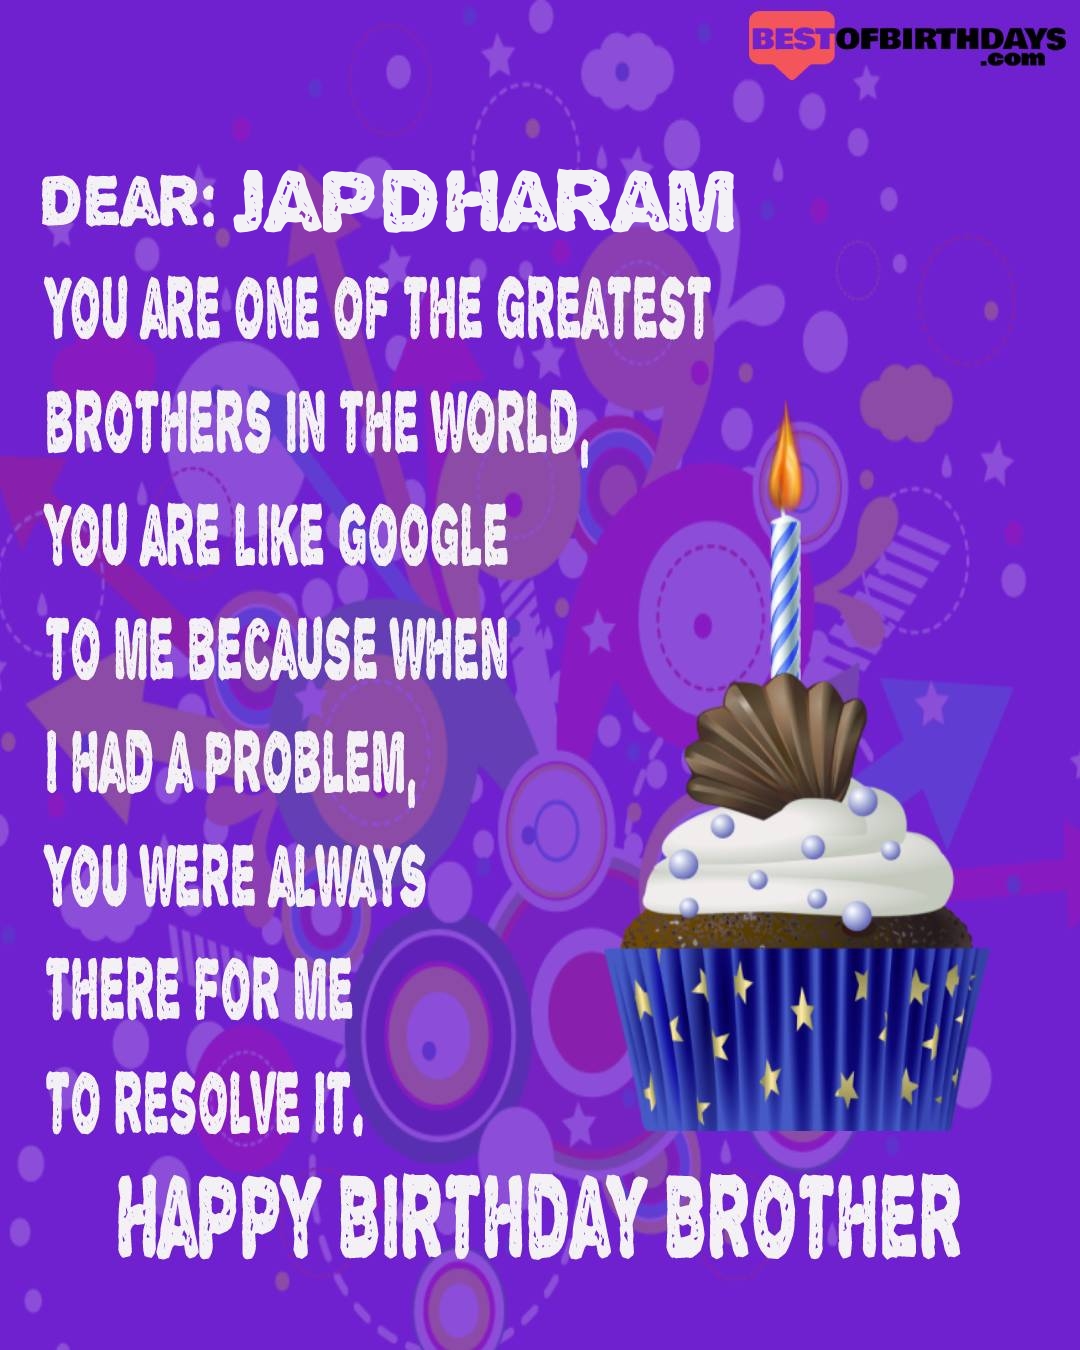 Happy birthday japdharam bhai brother bro